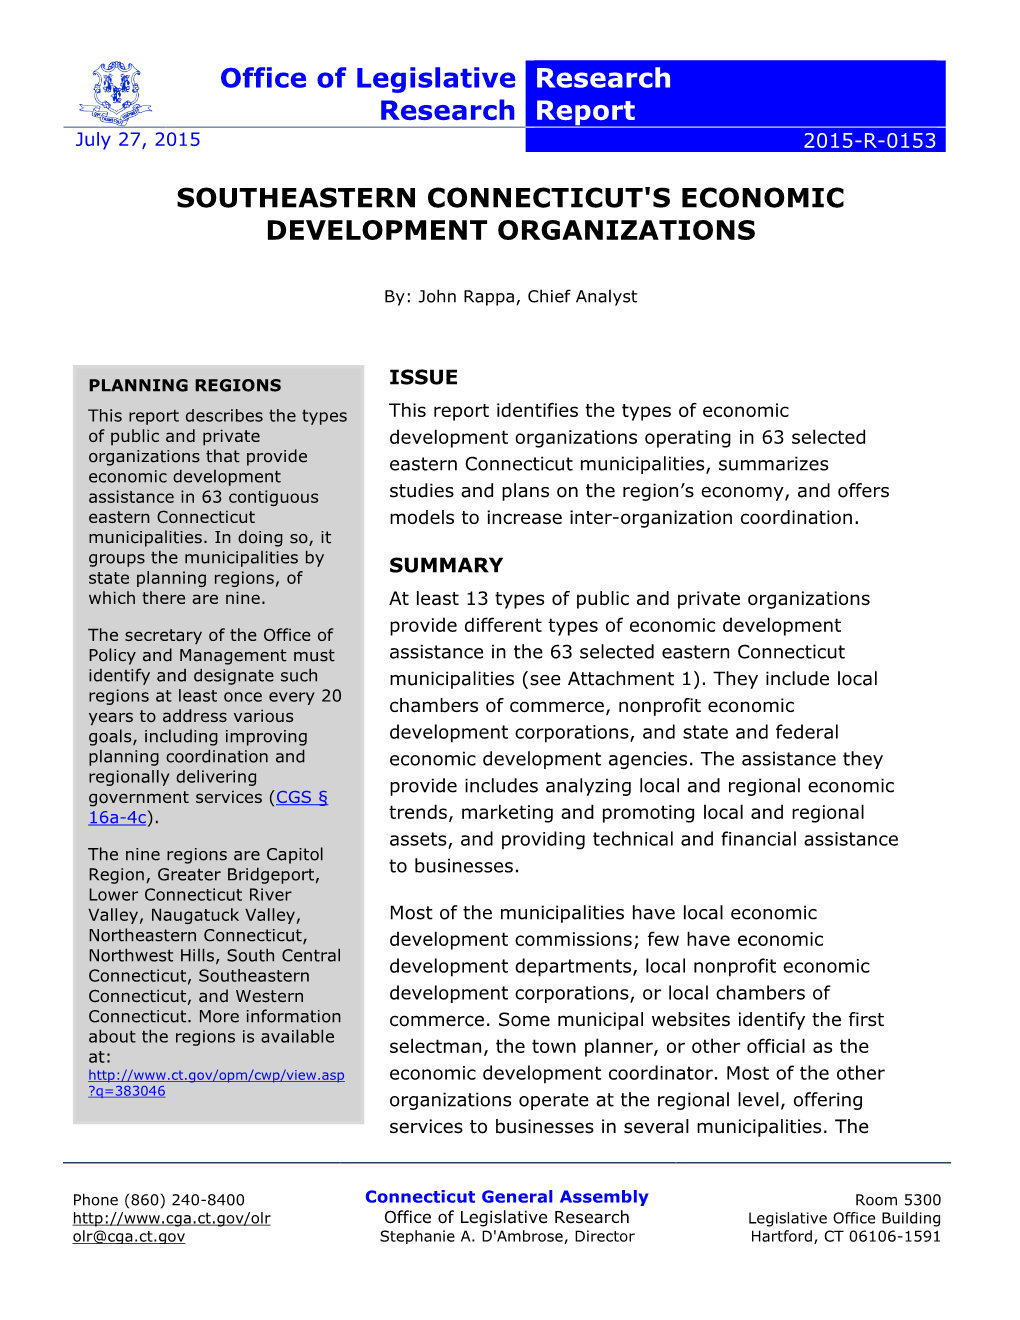 Southeastern Connecticut's Economic Development Organizations